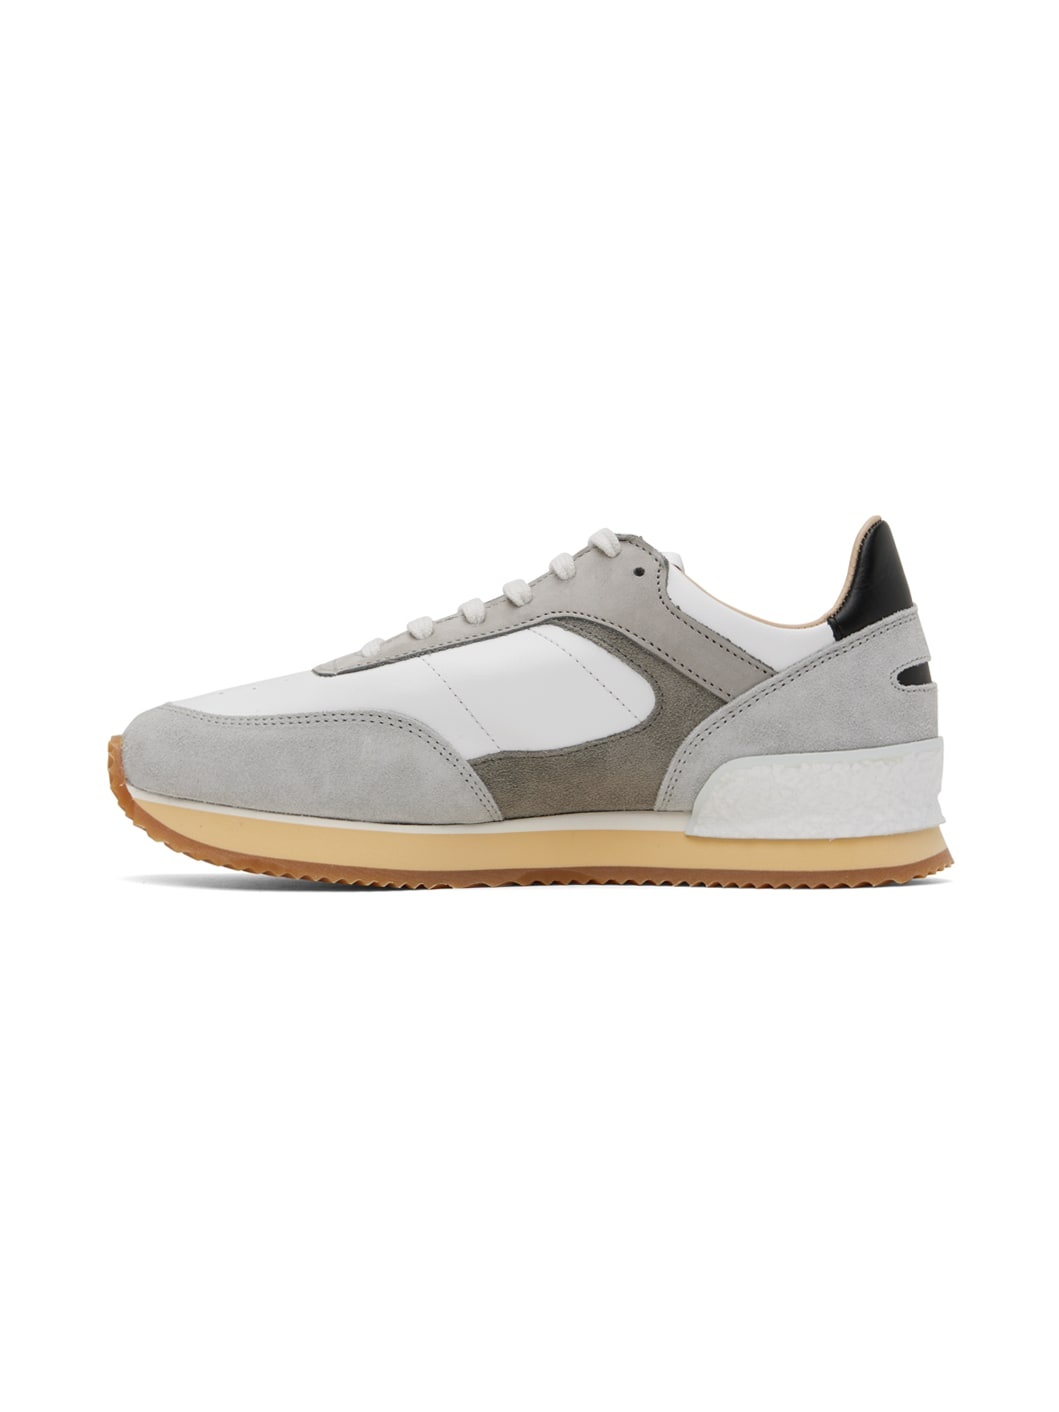 White & Gray Dash Low Sneakers - 3